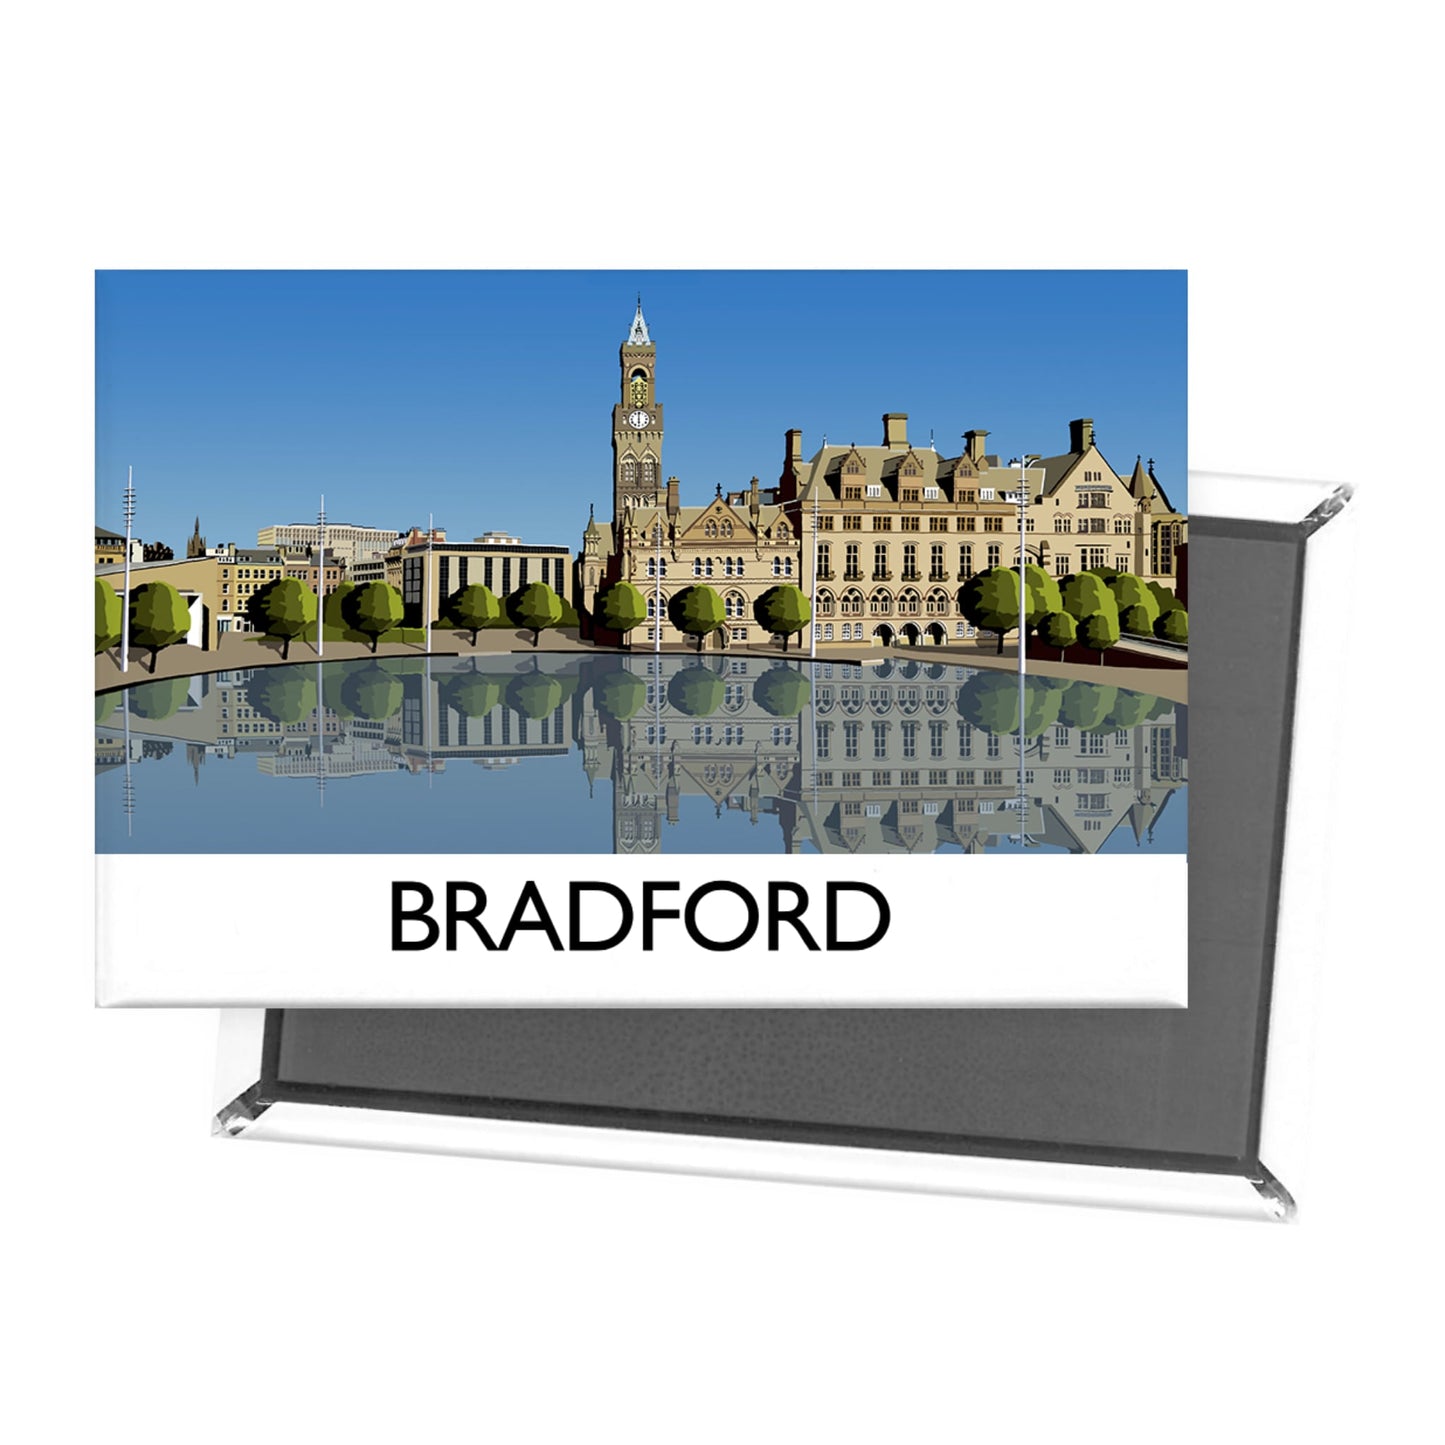 Bradford Magnet - The Great Yorkshire Shop